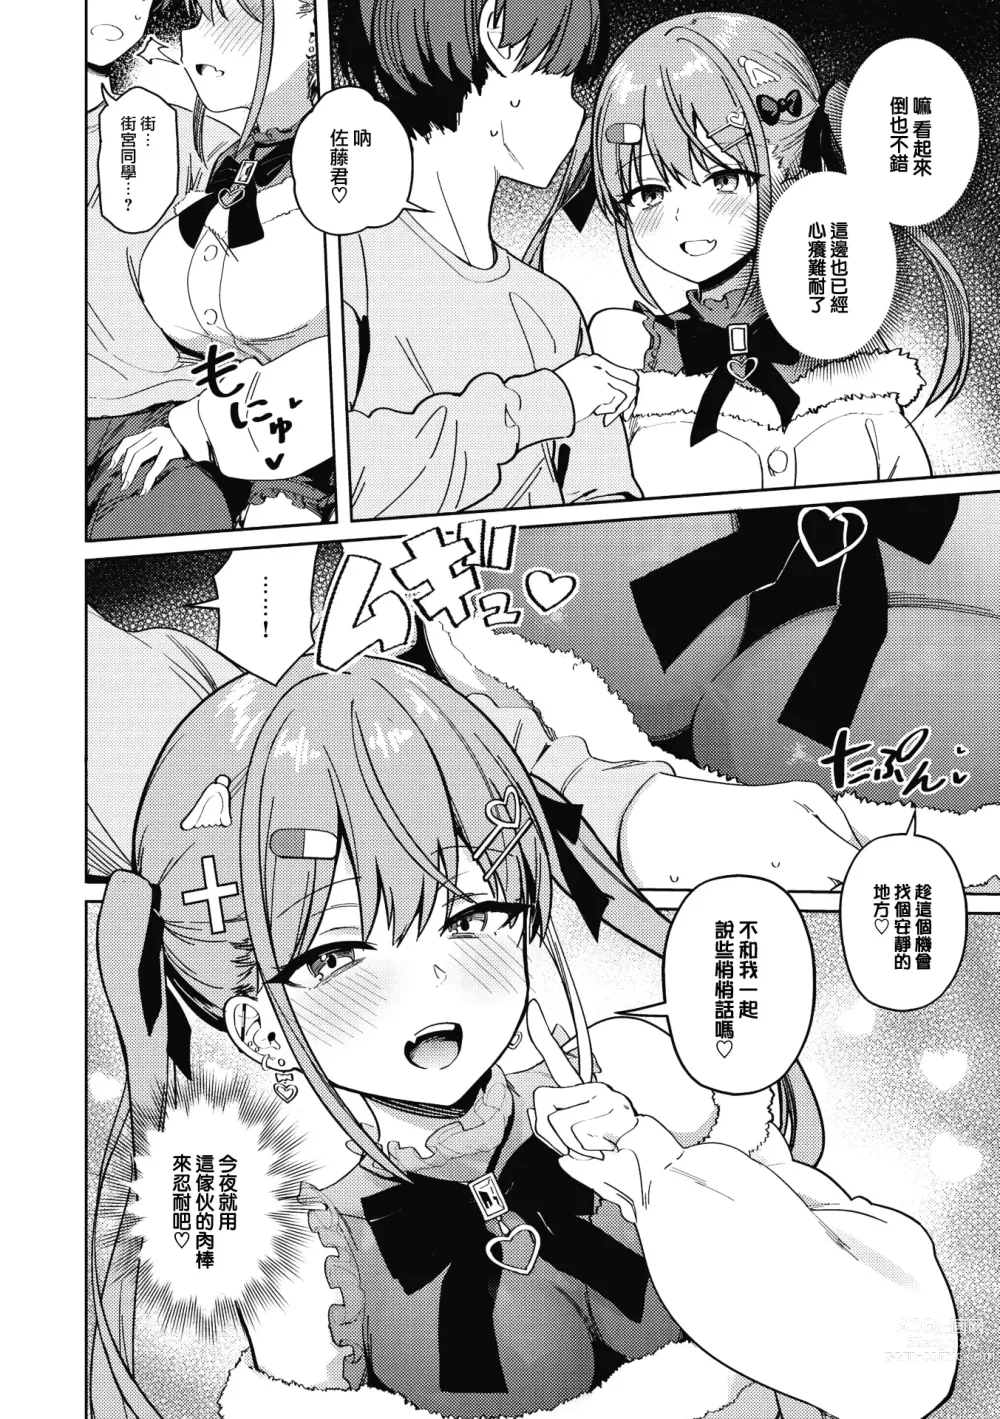 Page 5 of manga Best Match Mine Girl